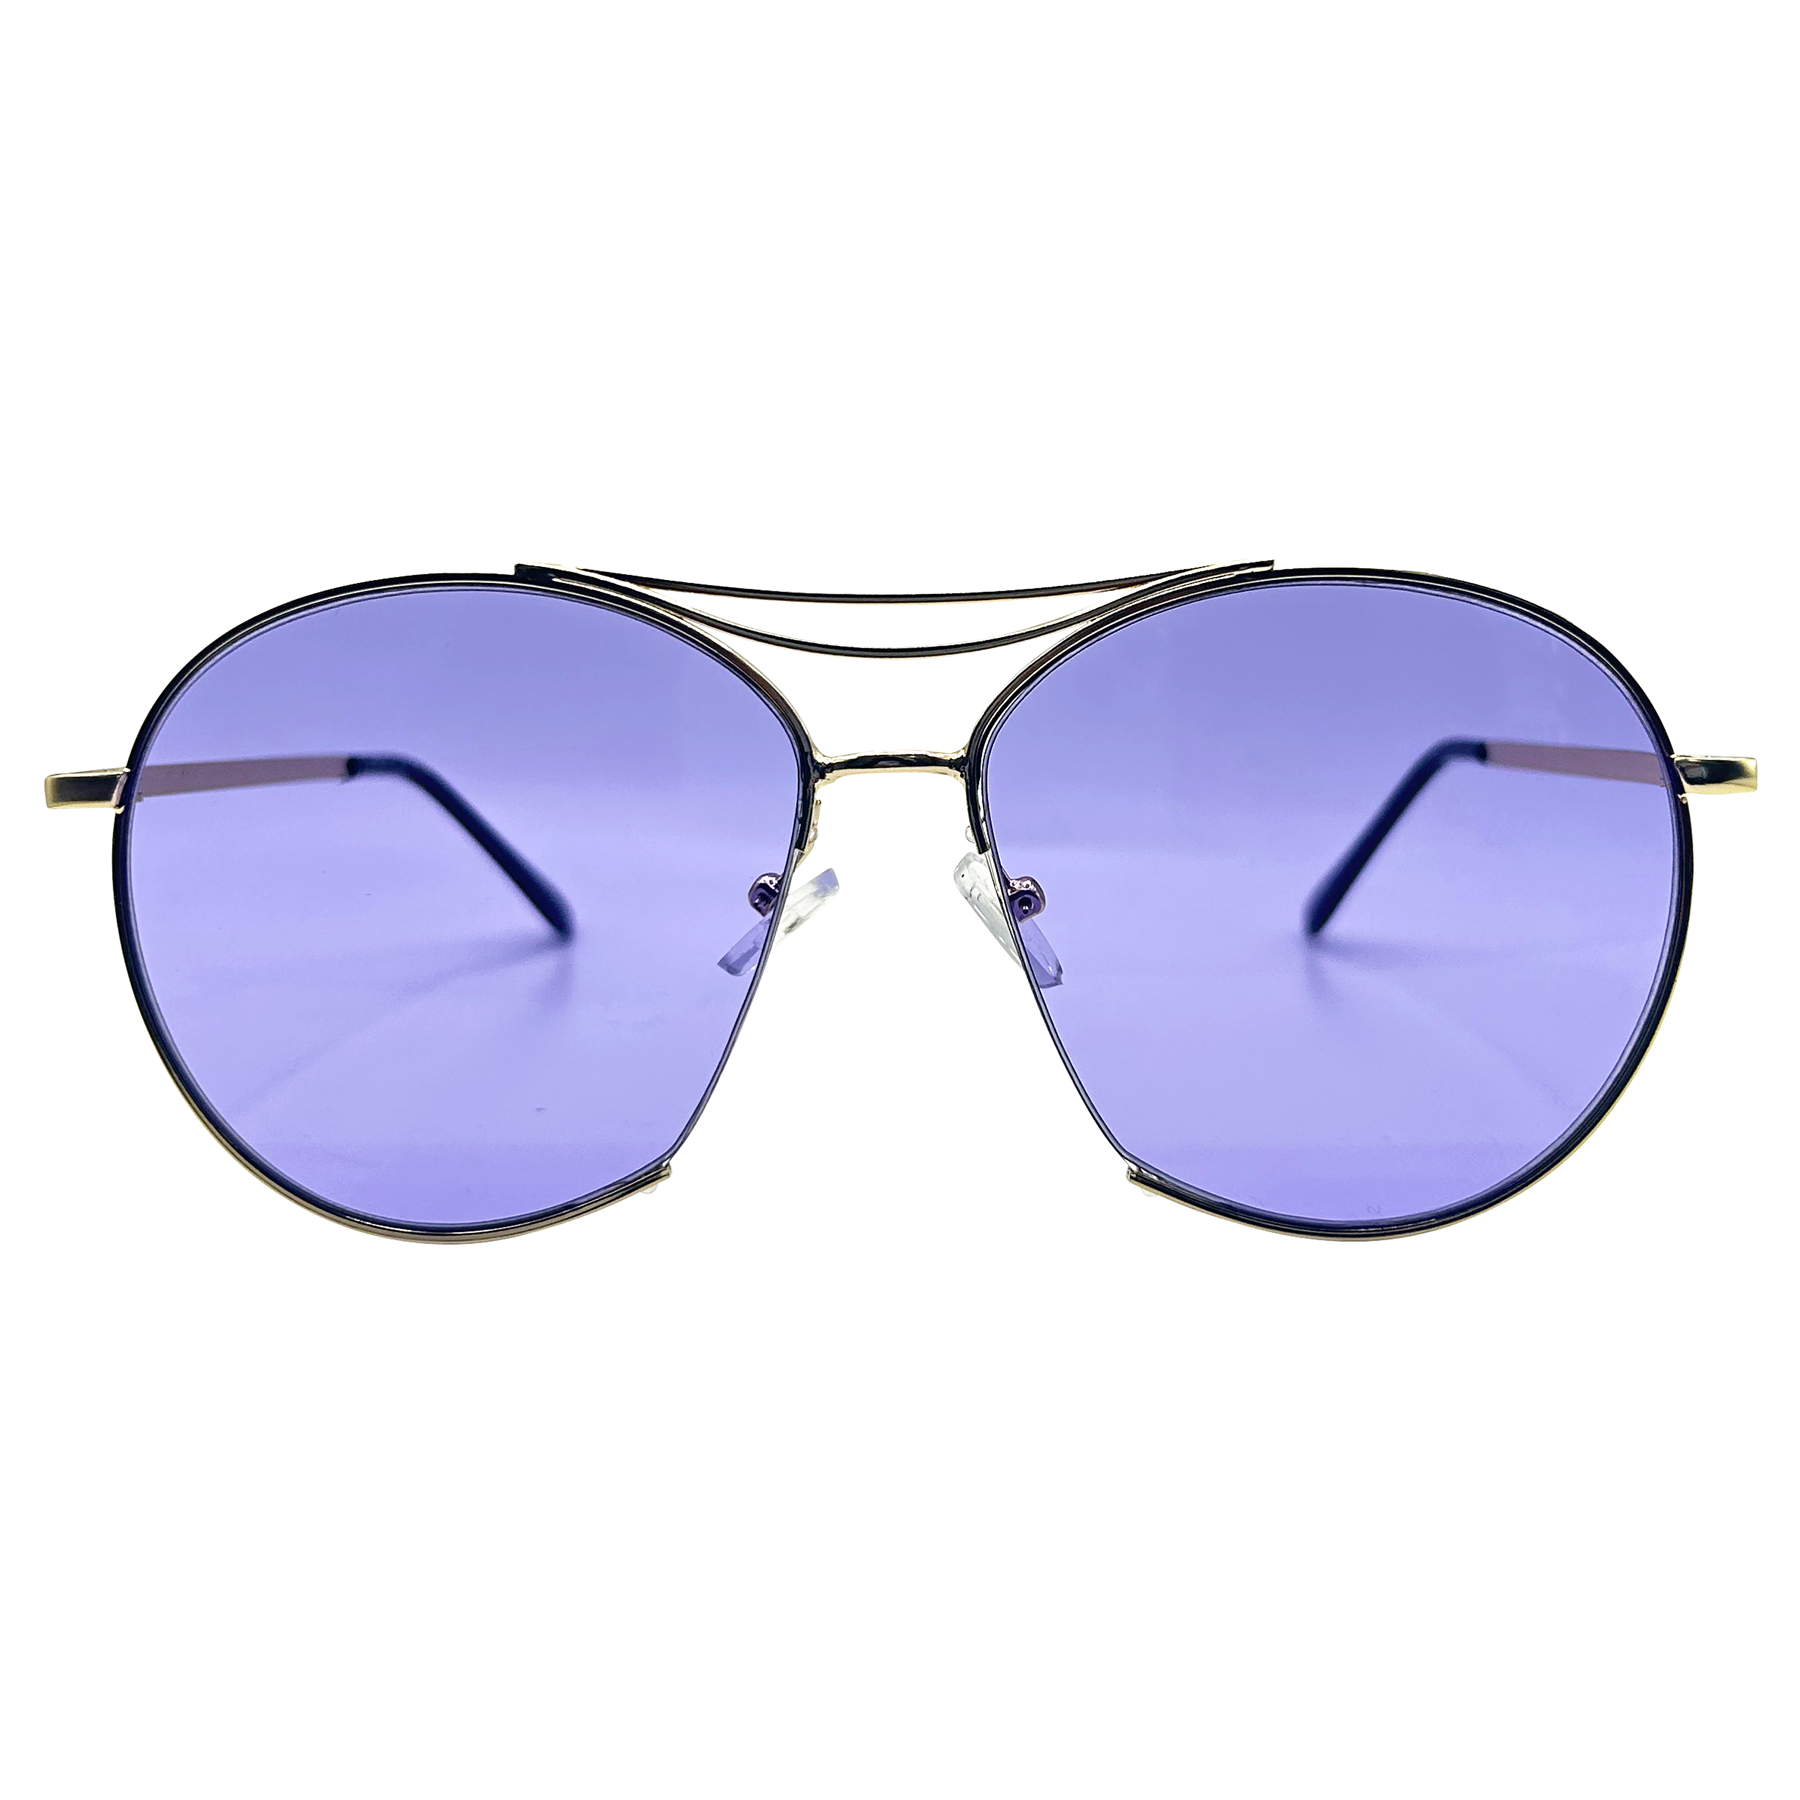 BRONSON Oversized Semi-Rimless Aviator Sunglasses